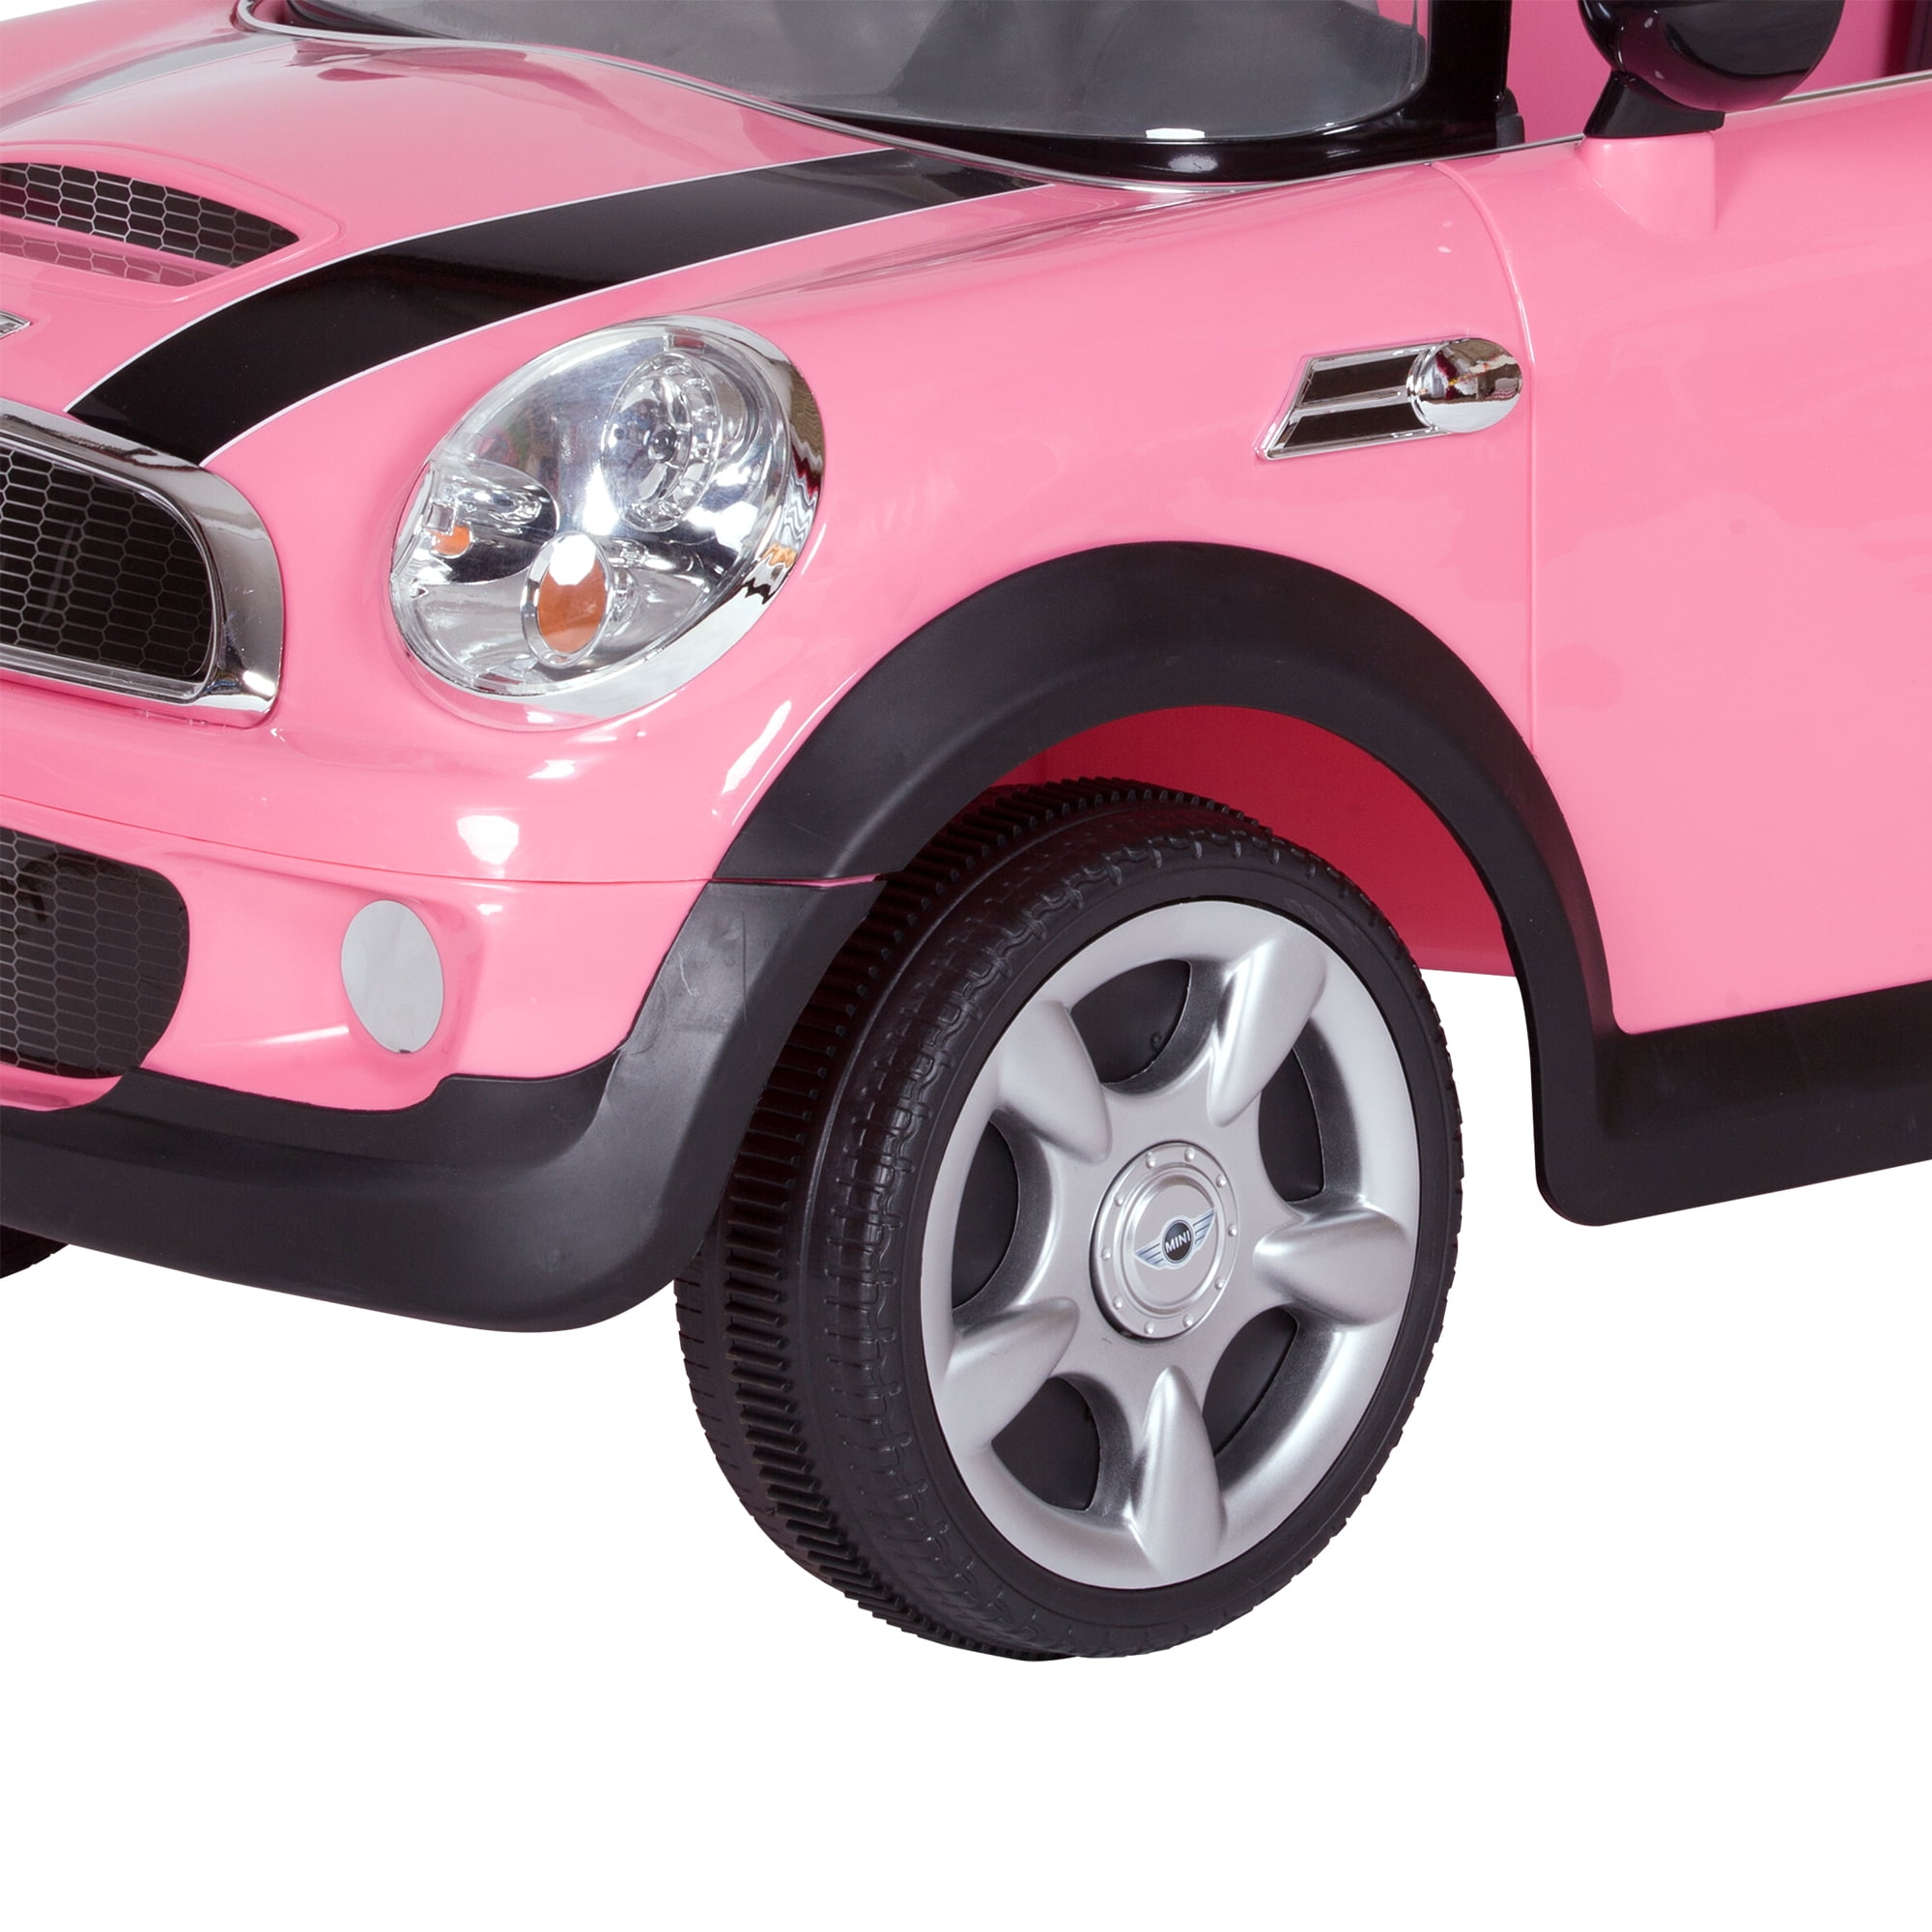 pink mini cooper ride on